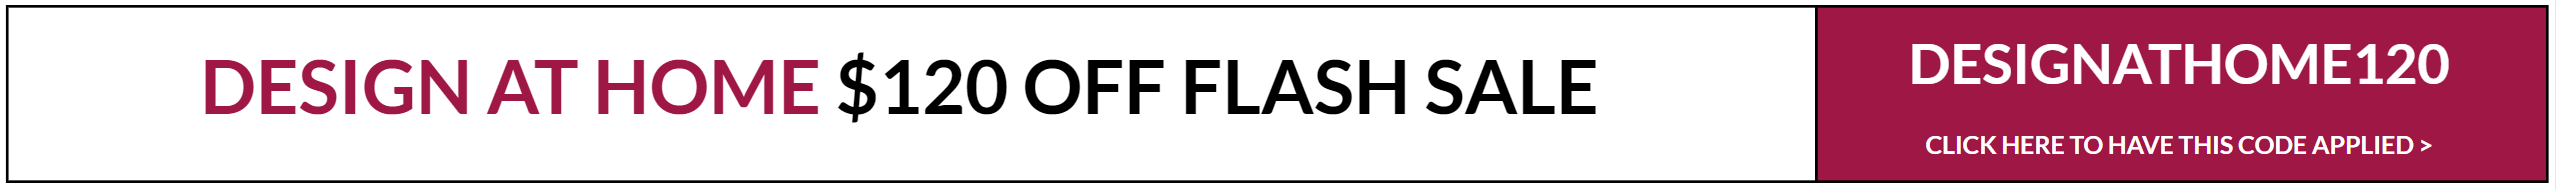 Gift Card Sale Banner $120 Off Flash Sale